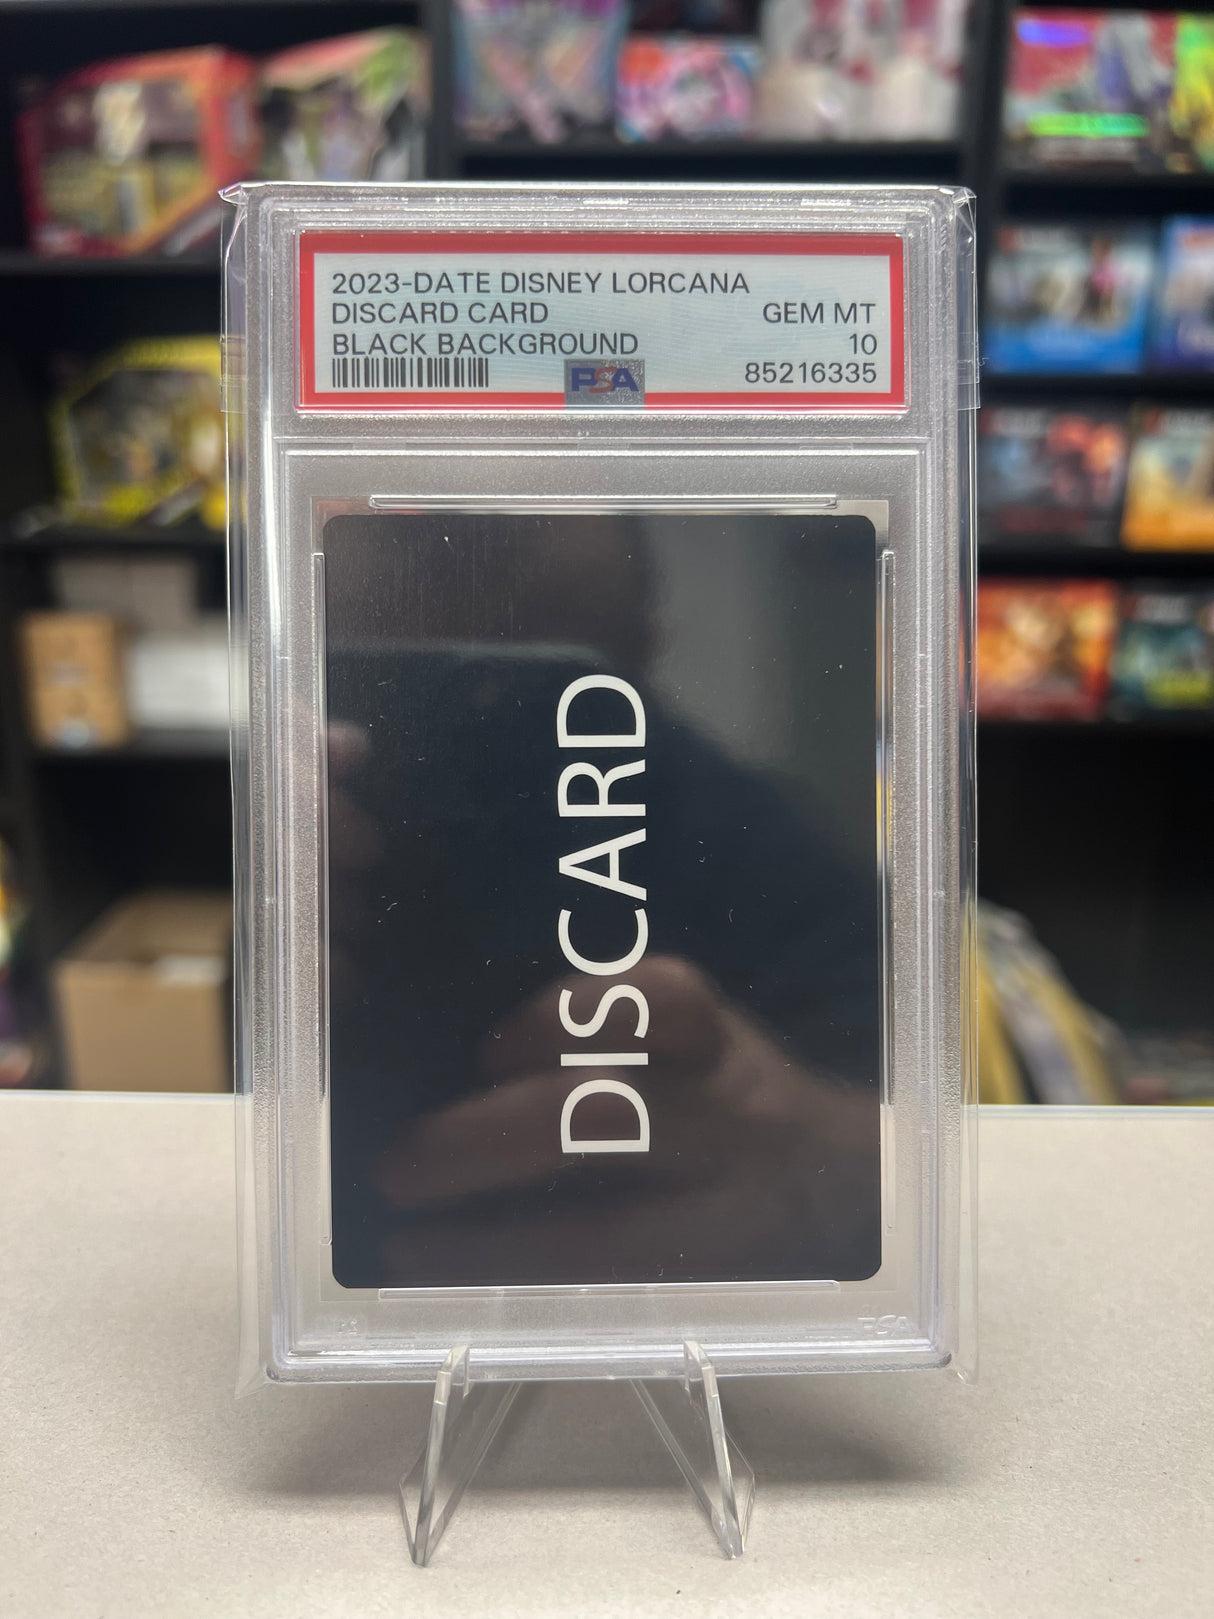 "Discard" Error - [Graded PSA 10] Disney Lorcana 2023